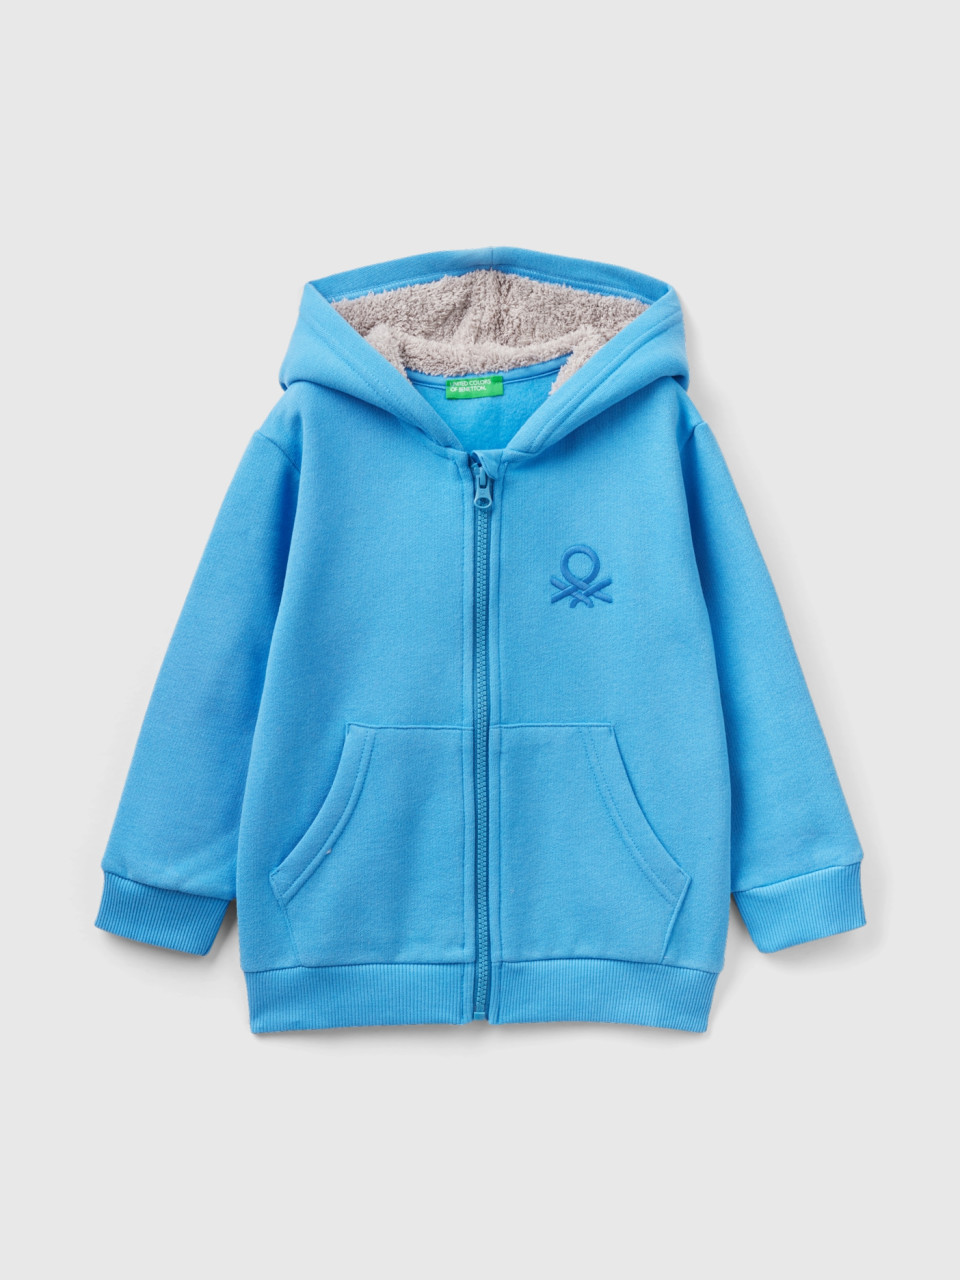 Benetton, Sweatshirt With Lined Hood, Blue, Kids